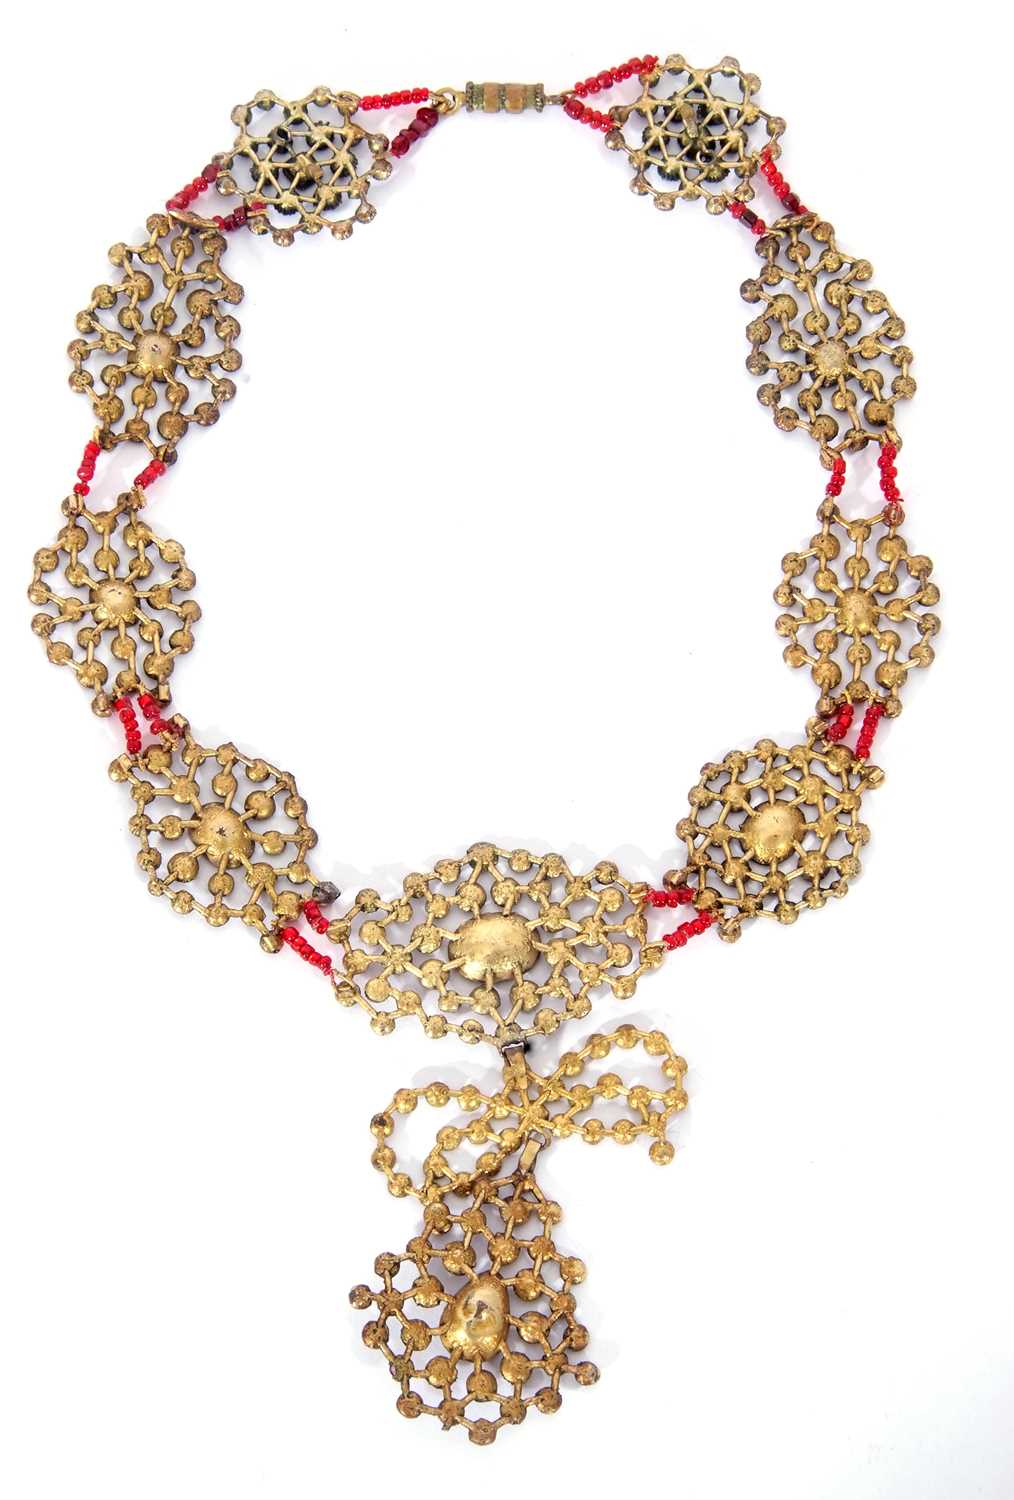 Vintage Bohemian garnet drop necklace, the flat cut garnets with foil backed enclosed gilt metal - Image 6 of 9